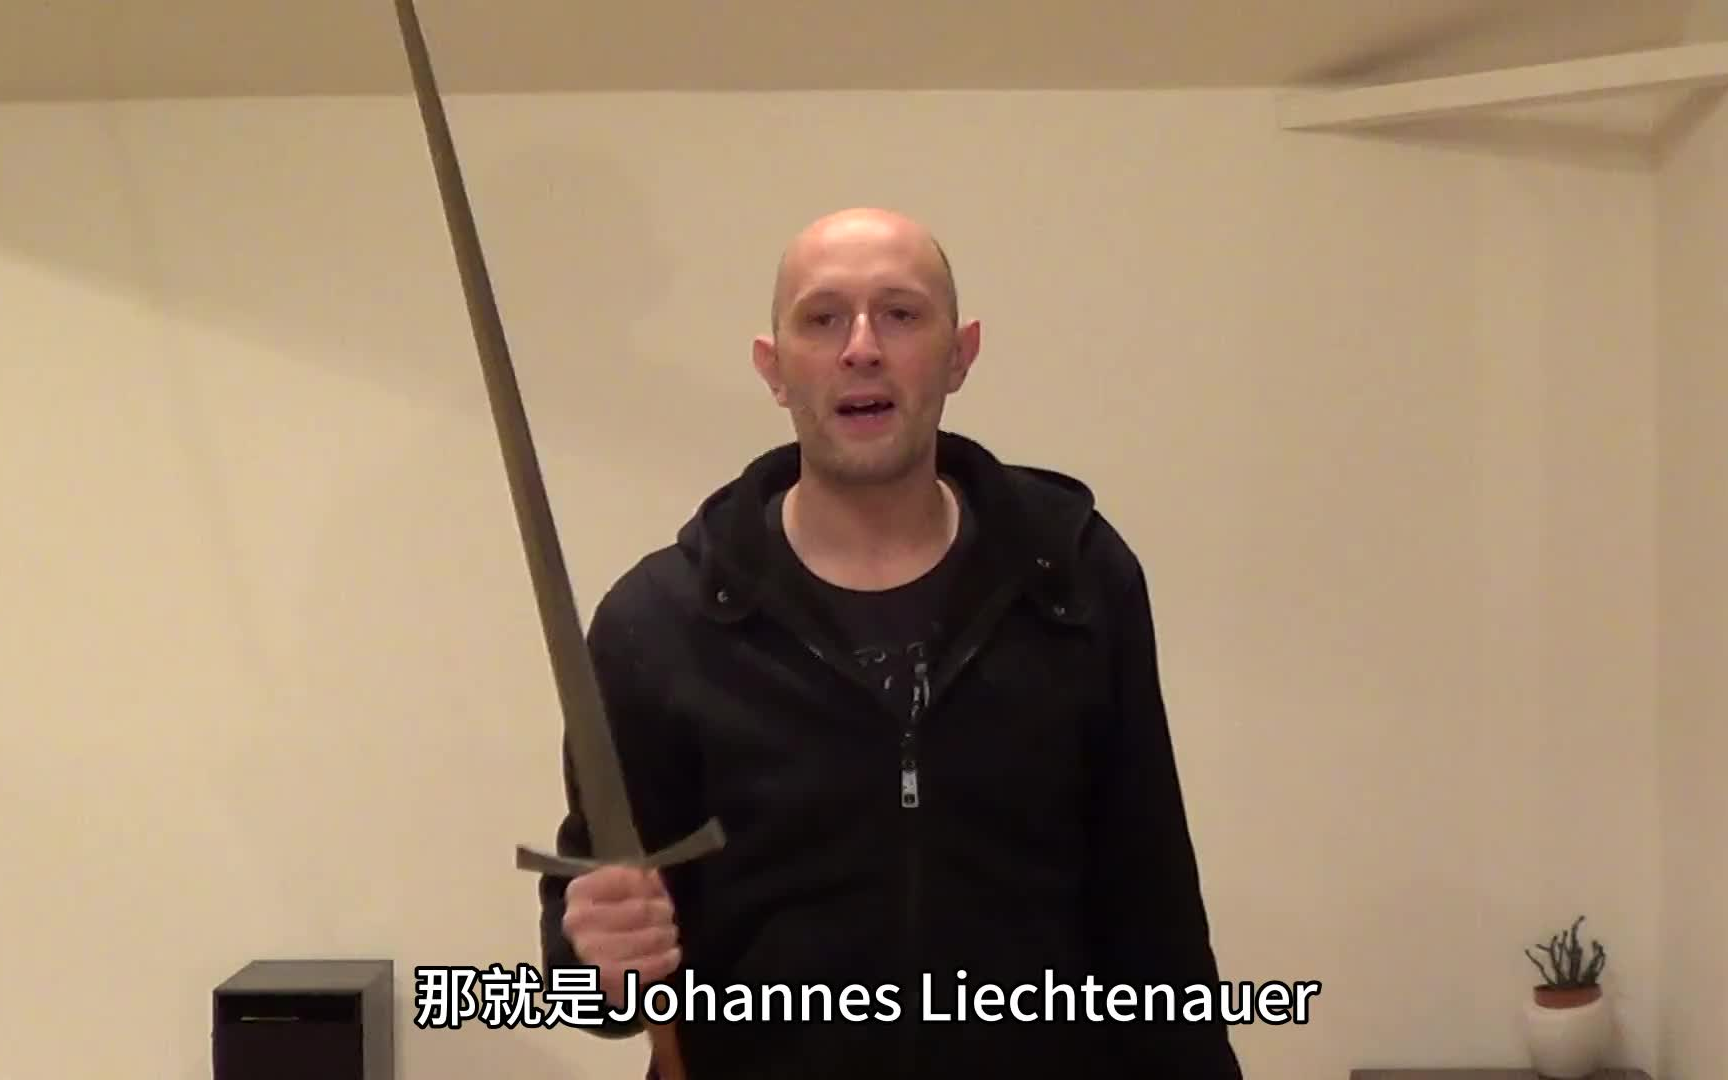 Liechtenauer并非寻常的中世纪长剑体系